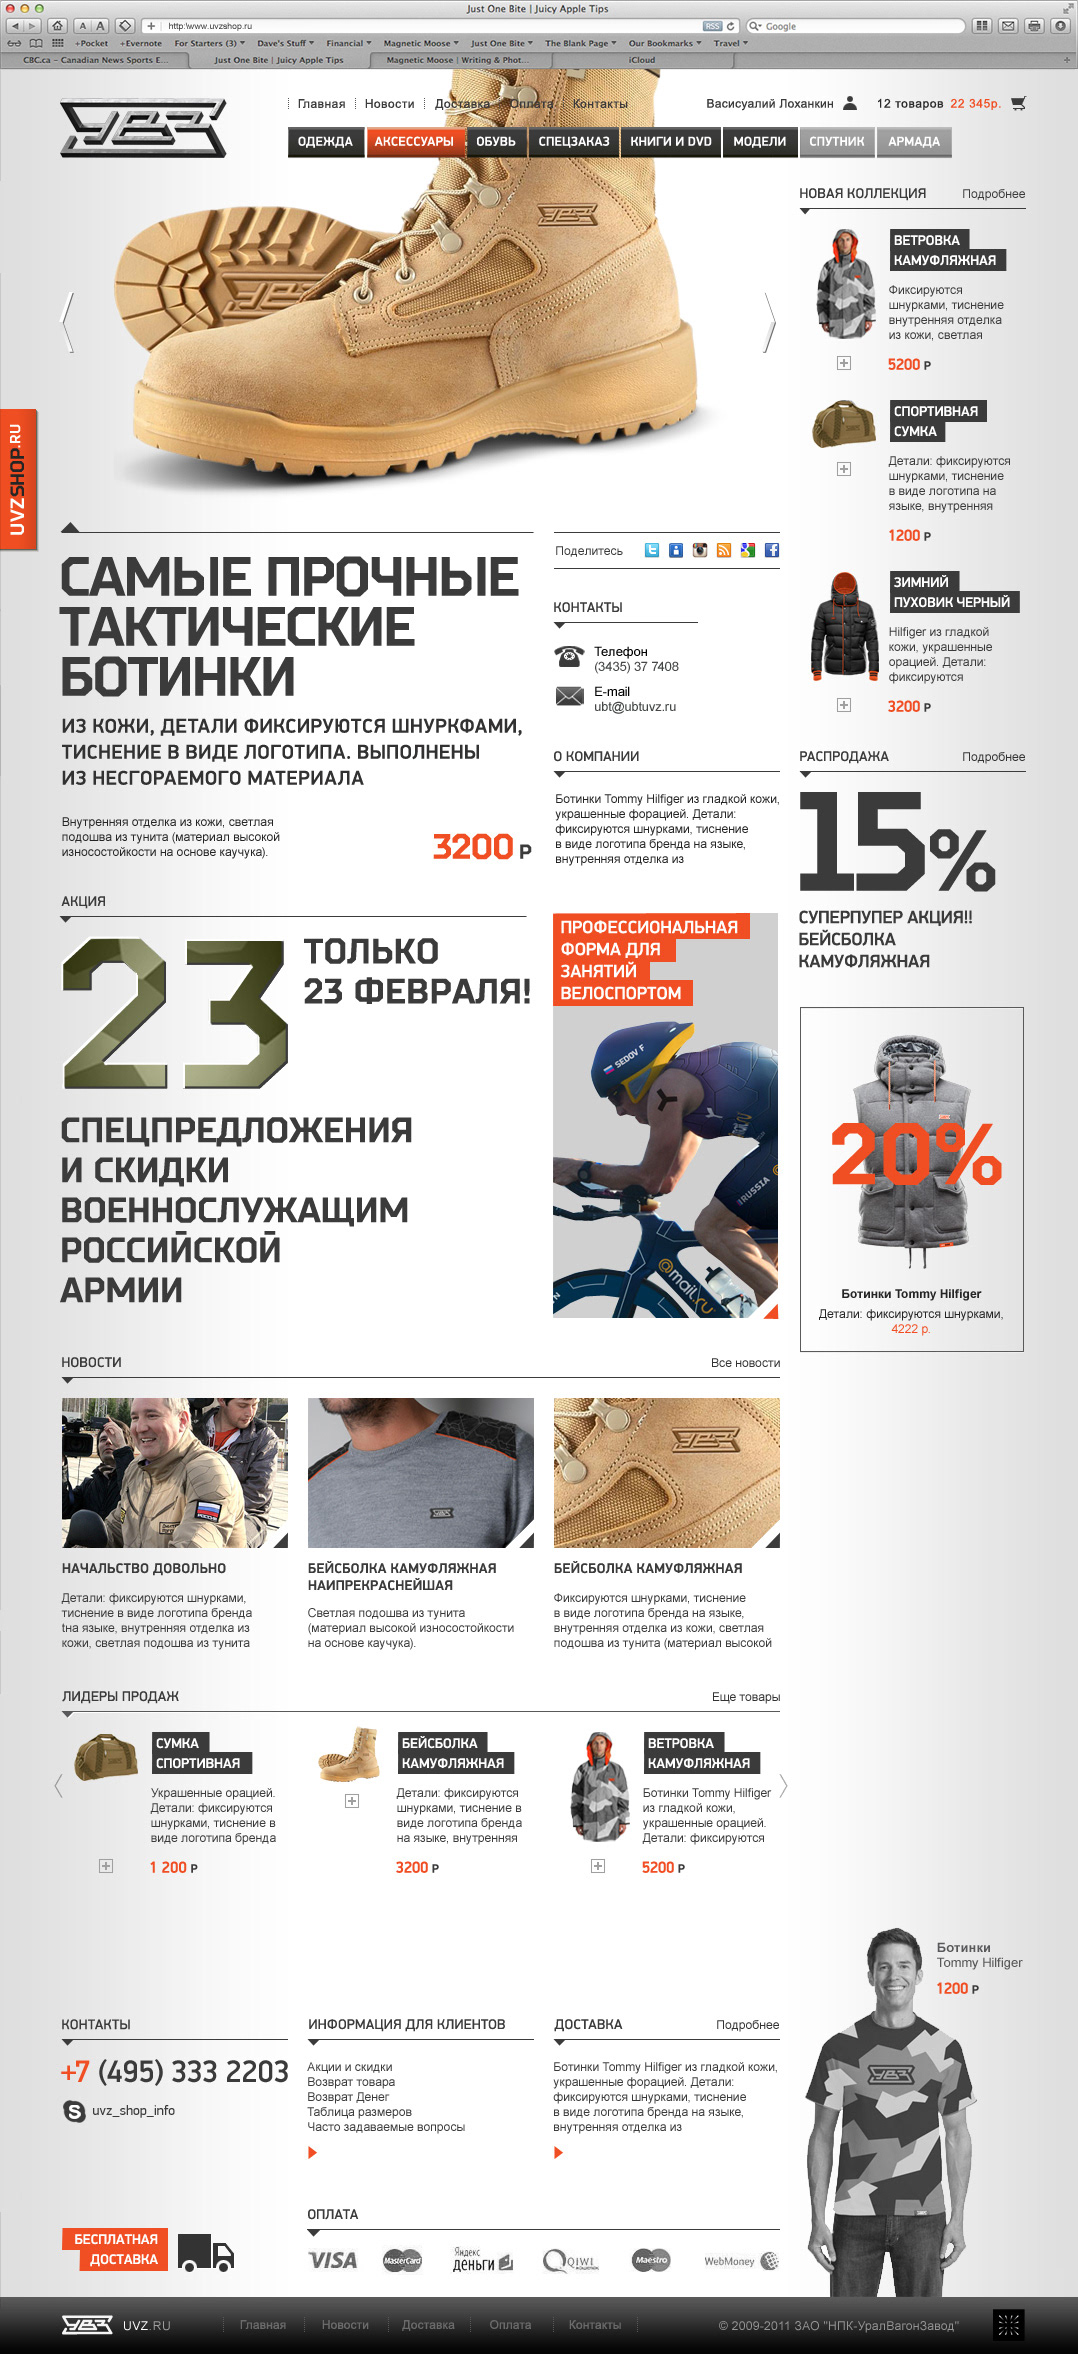 Web Year 2013 design Russia